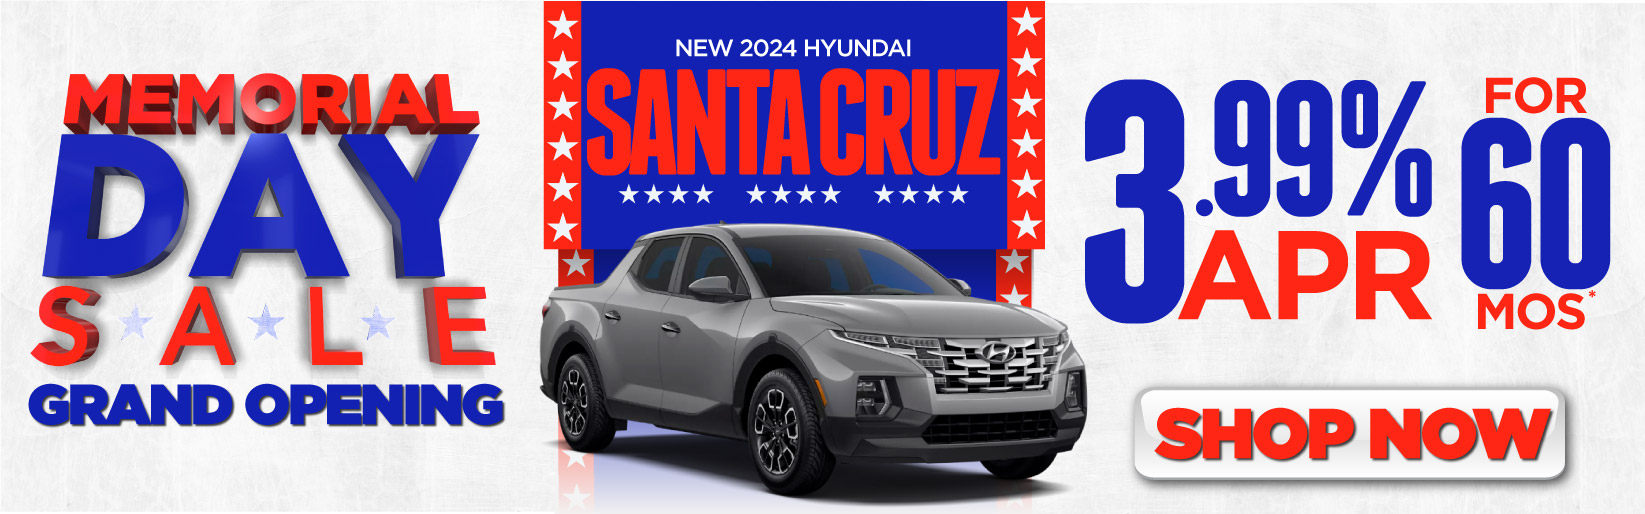 New 2024 Hyundai Santa Cruz - 3.99% APR For 60 Mos.* – Act Now